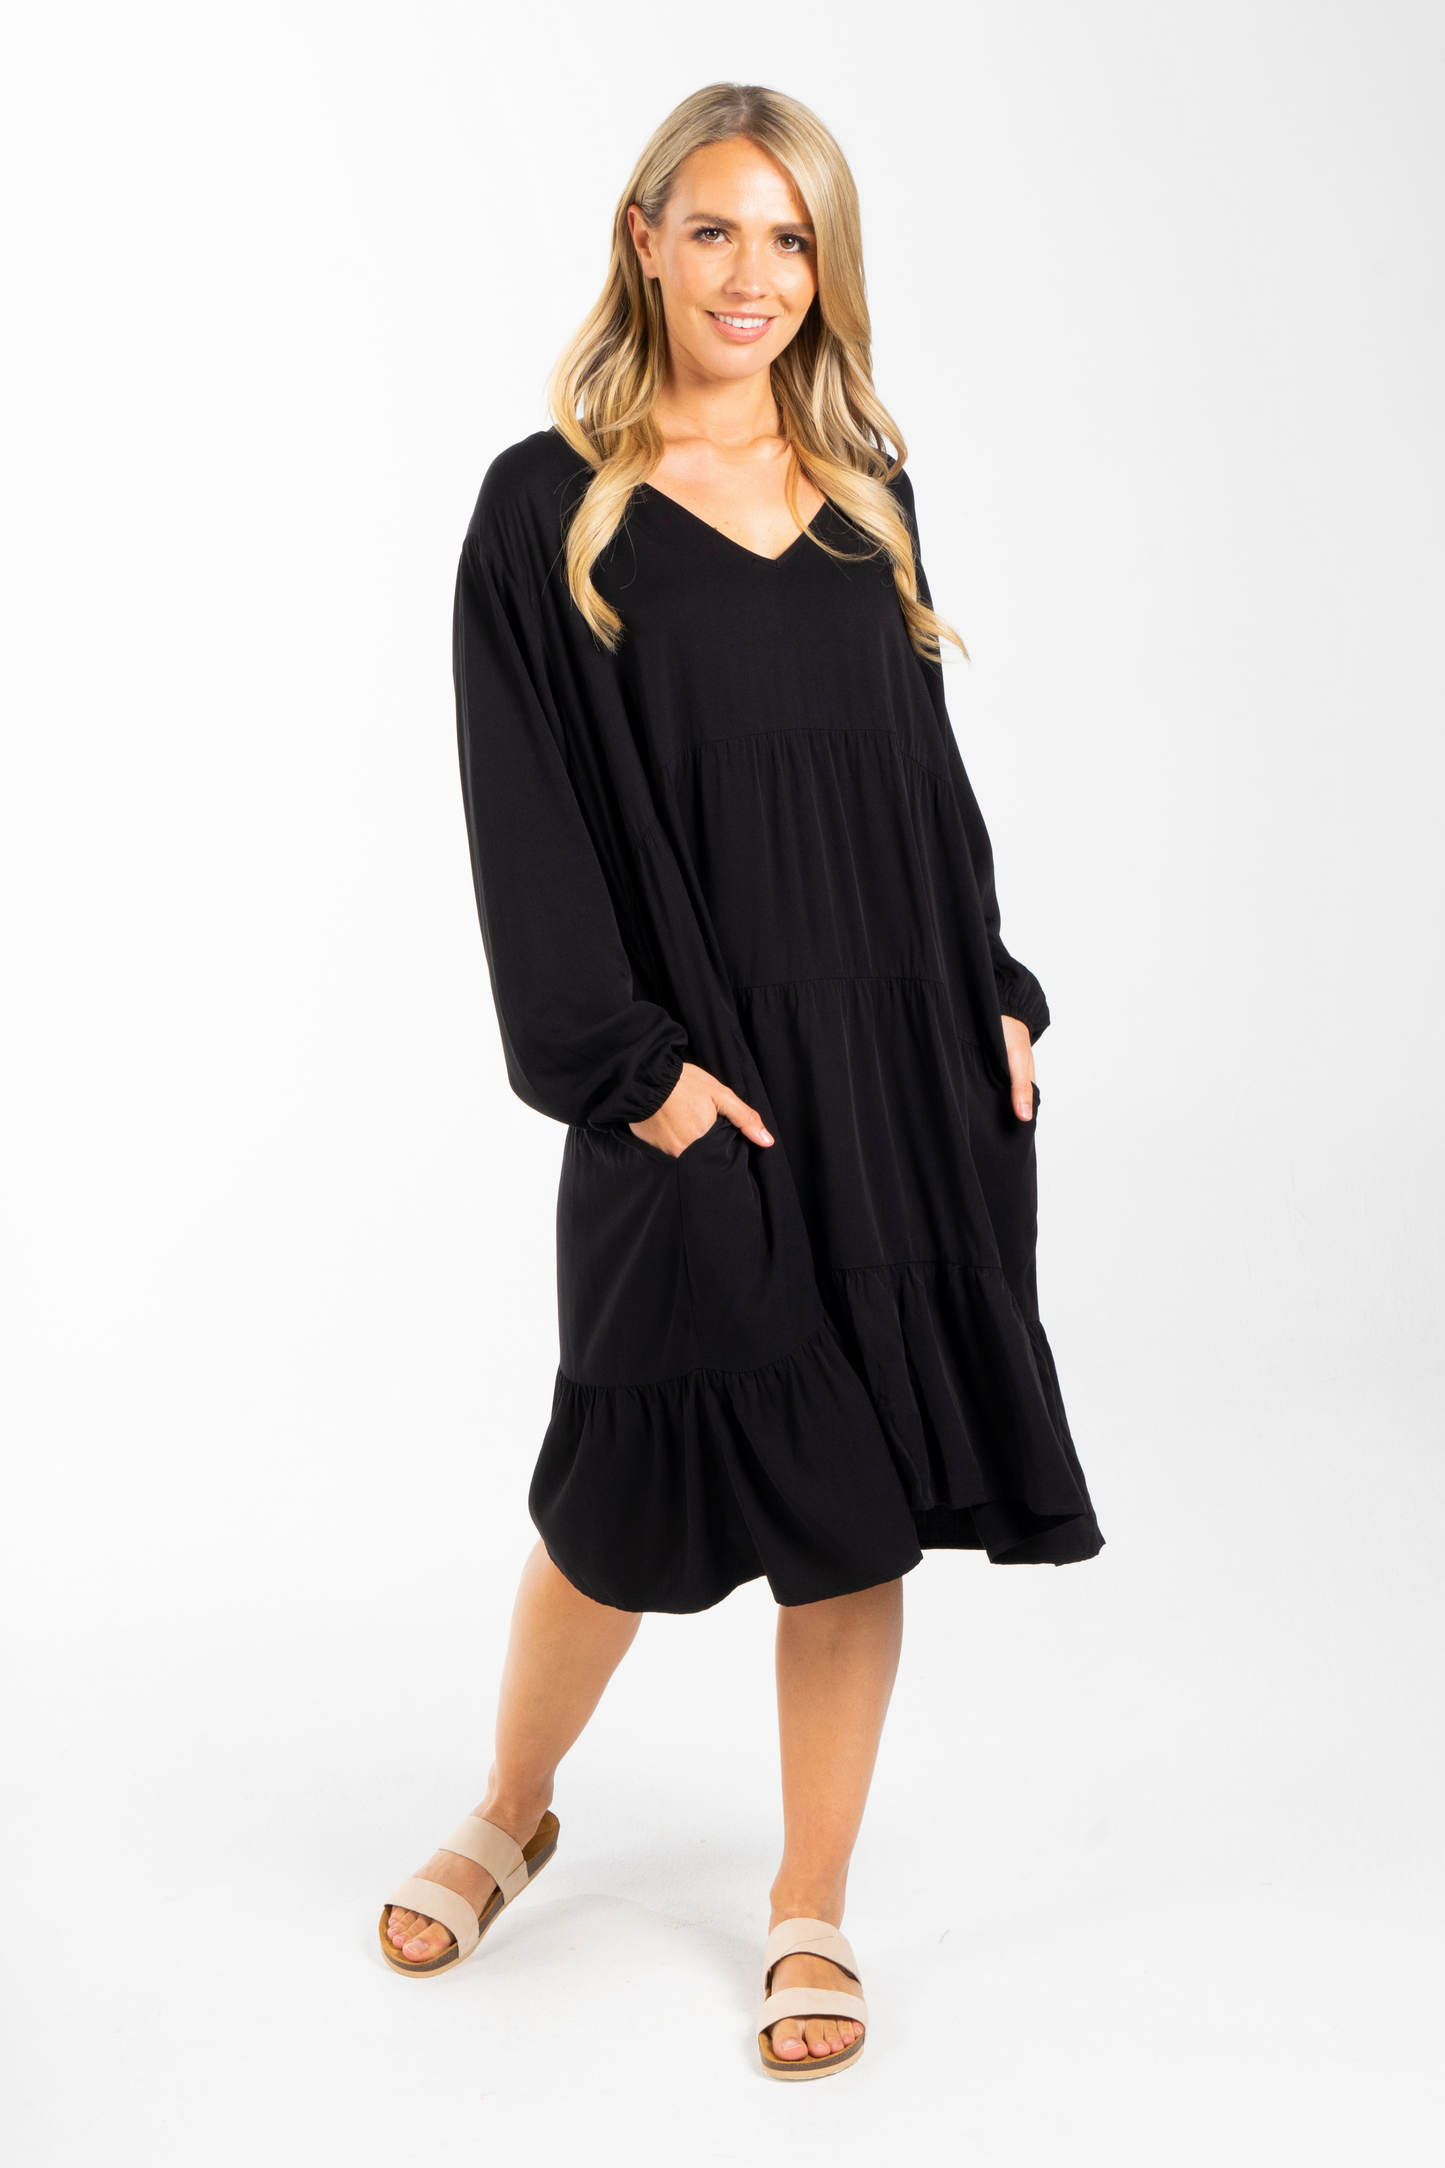 Long Sleeve Chic Dress in Black